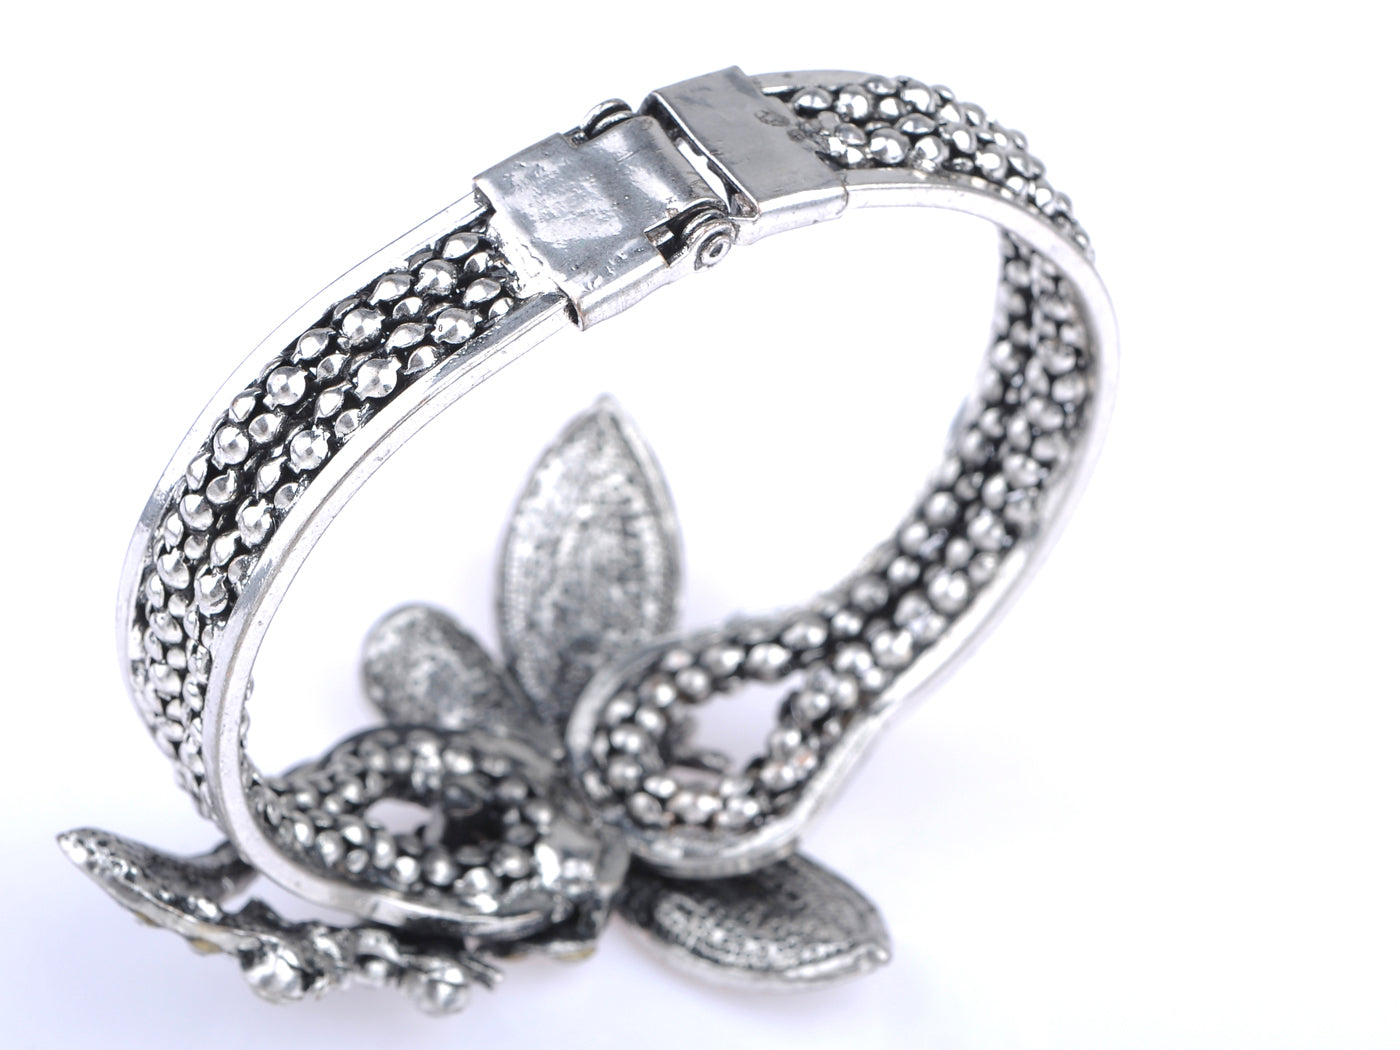 Antique Inspire Butterfly Weave Braid Bracelet Bangle Cuff